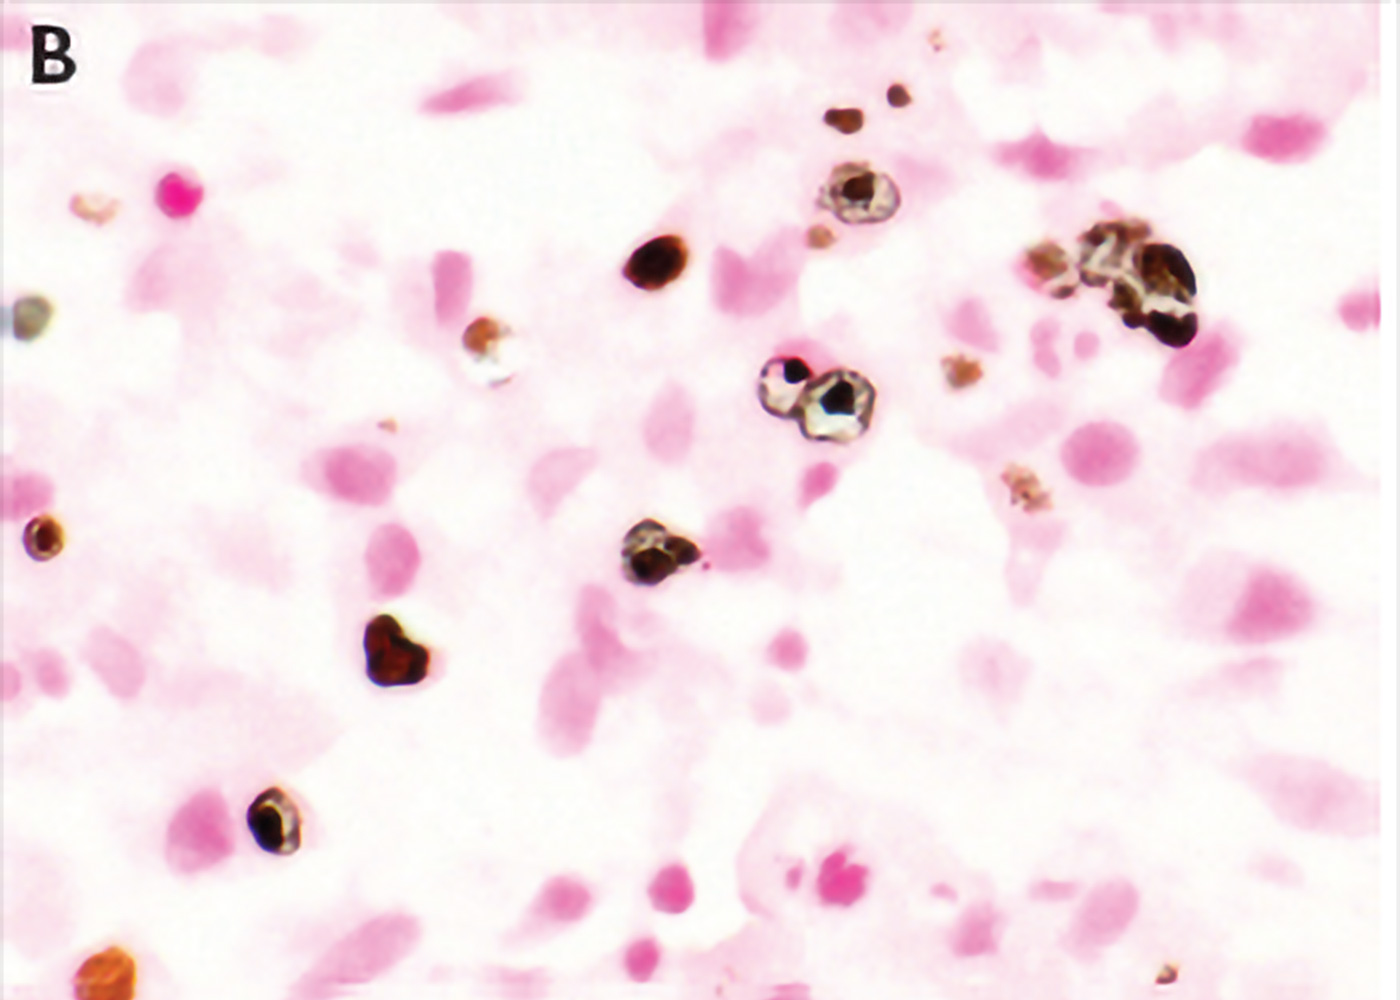 Fig 6. Von Kossa staining highlights the diagnosis of malakoplakia